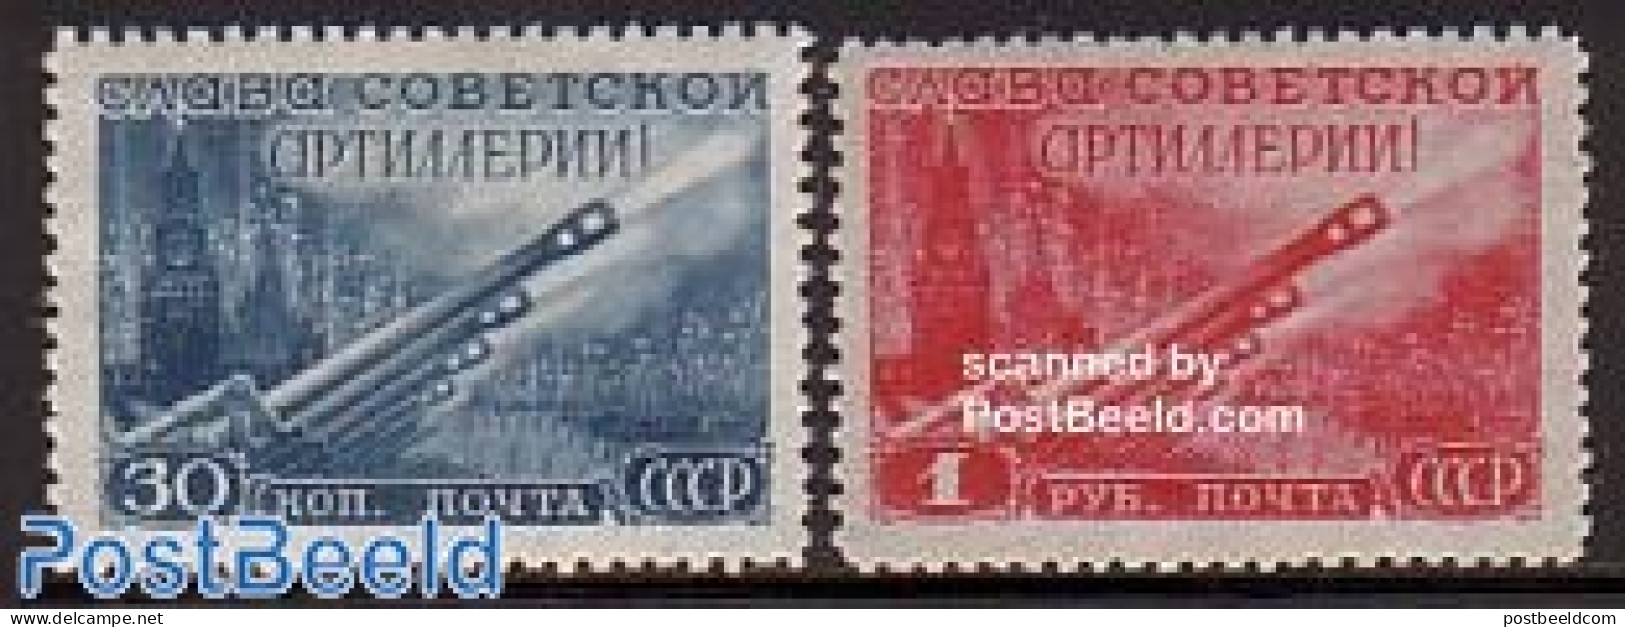 Russia, Soviet Union 1948 Artillery Day 2v, Mint NH, History - Militarism - Neufs